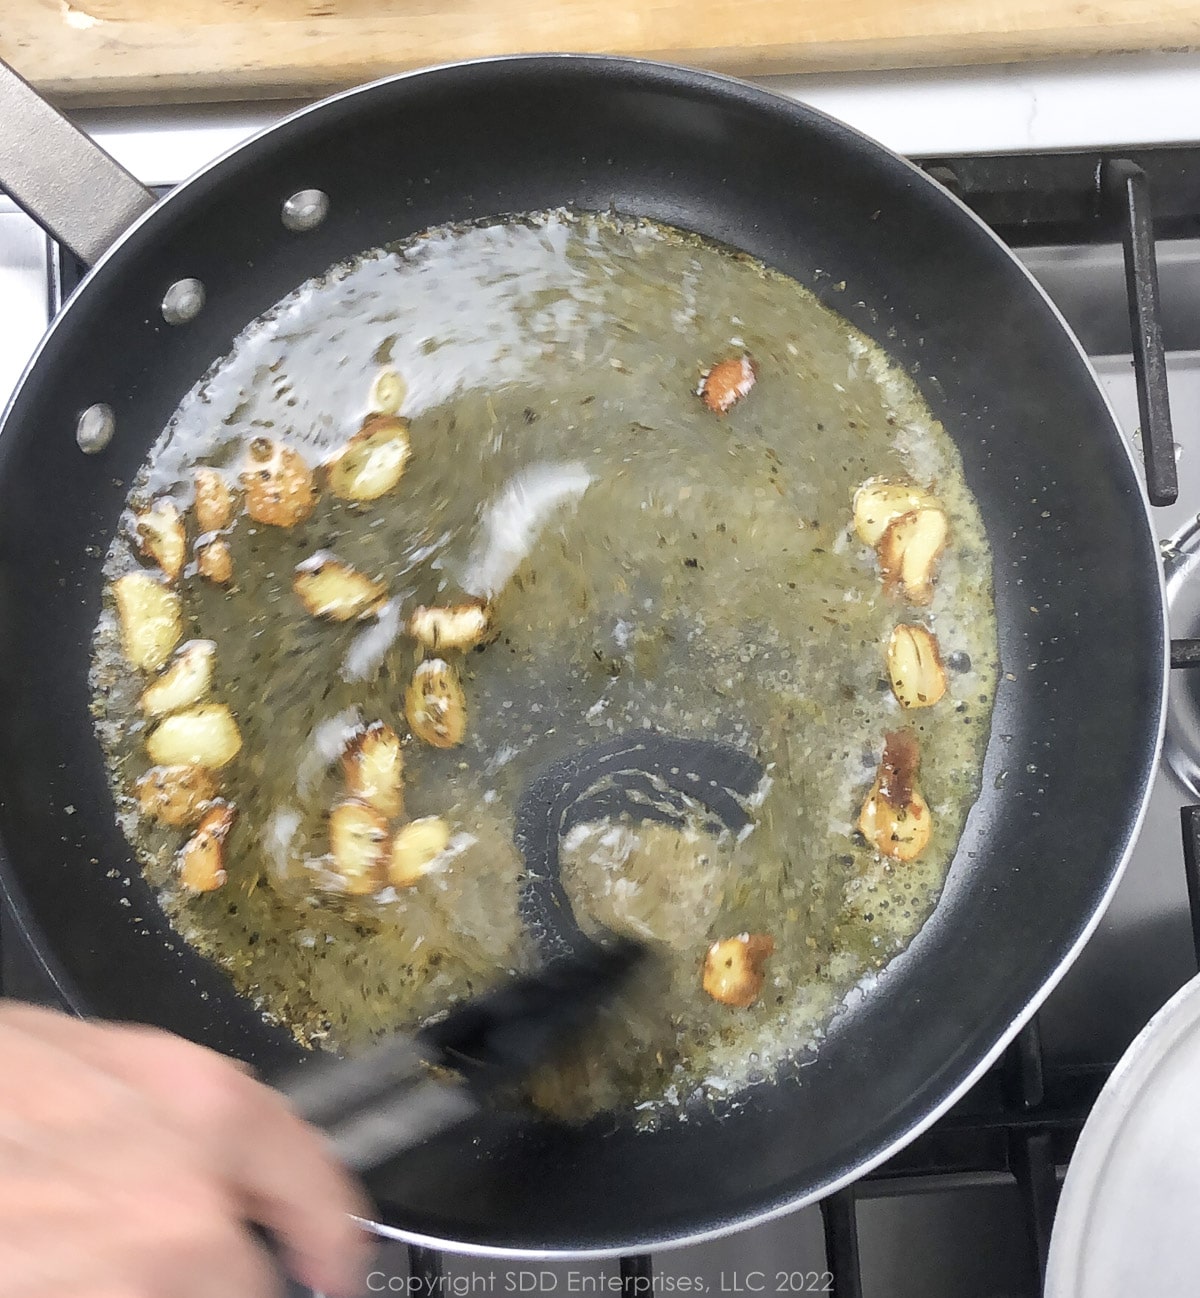 garlic browning in utter in a sauté pan